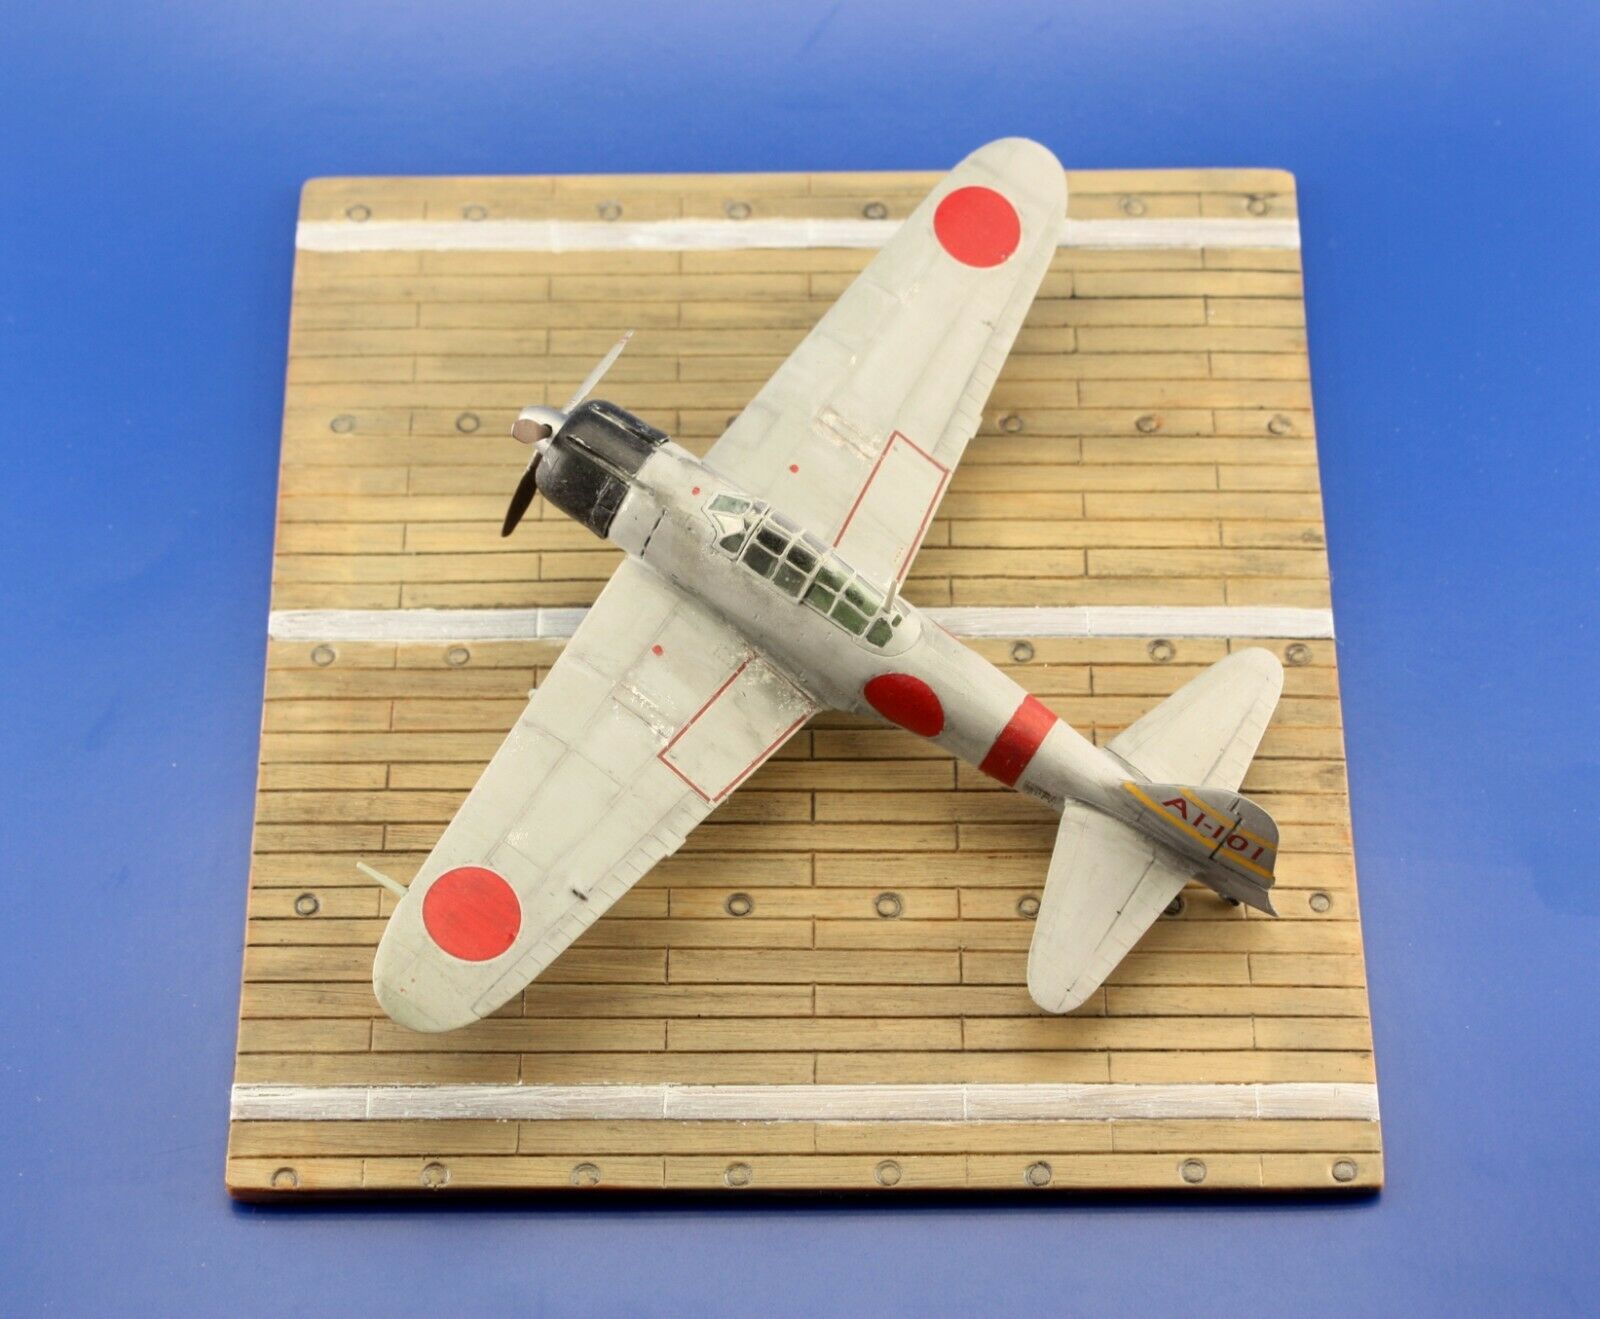 1/72 Japanese Carrier Deck Scale Model Aeroplane Display Base /D27 - redoguk